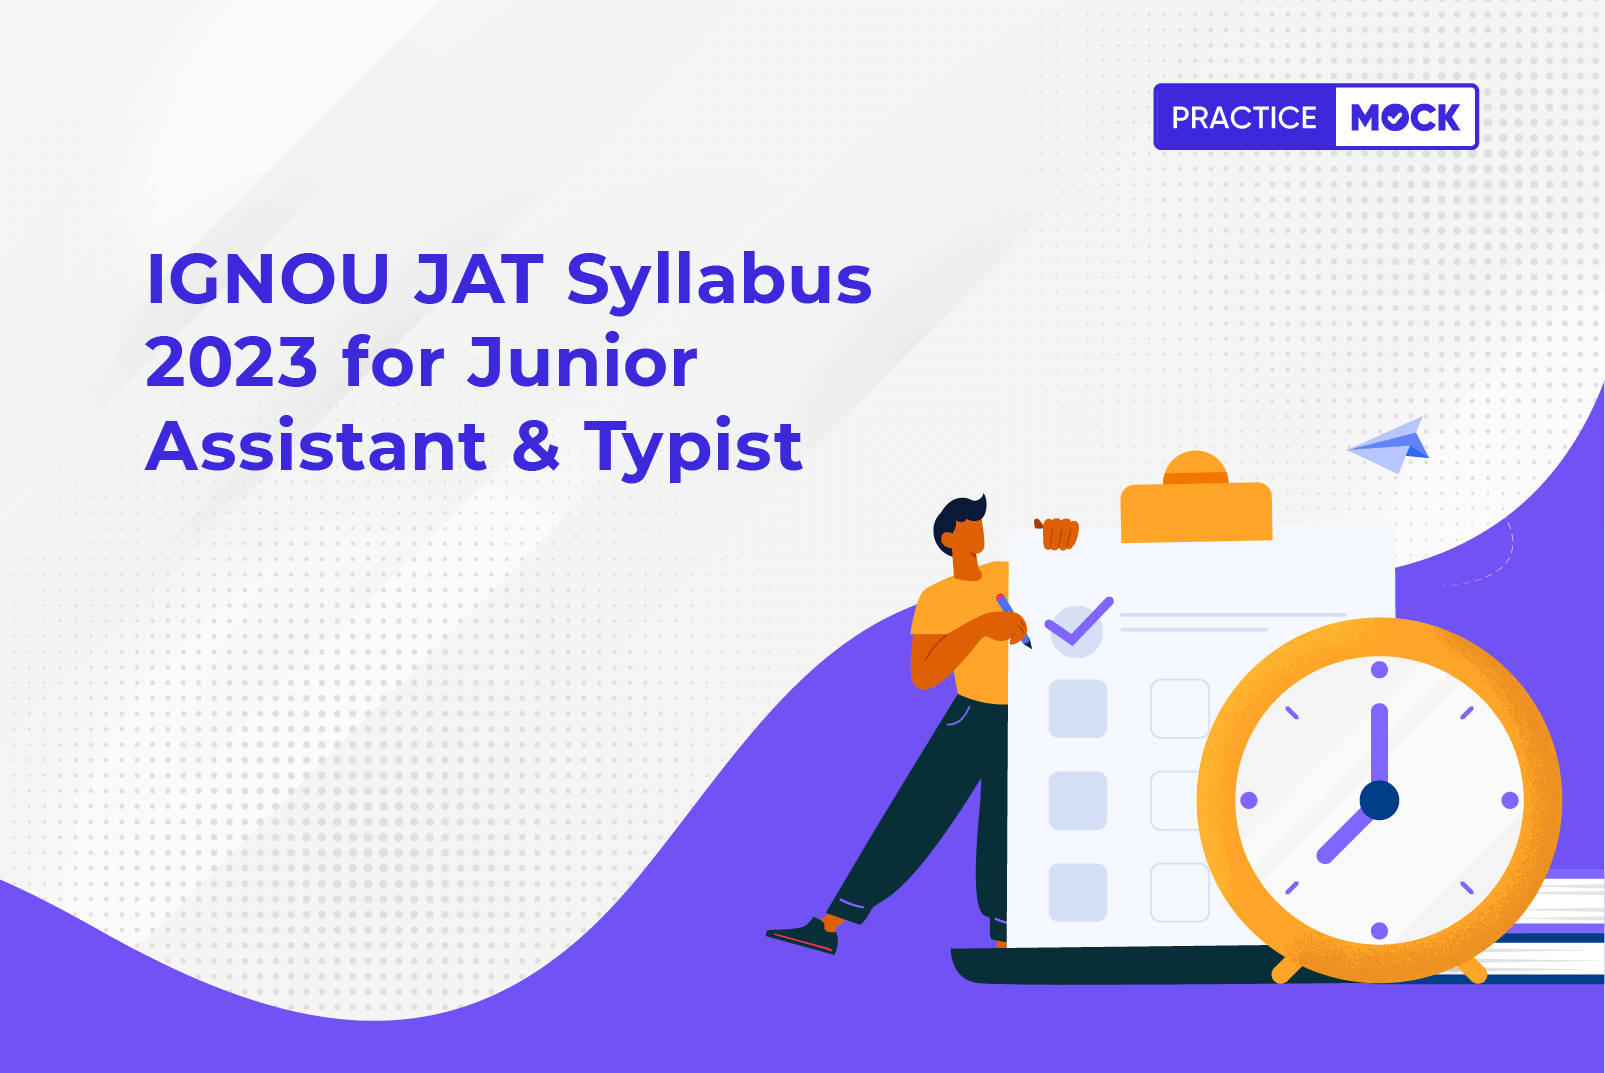 IGNOU JAT Syllabus 2023 for Junior Assistant & Typist